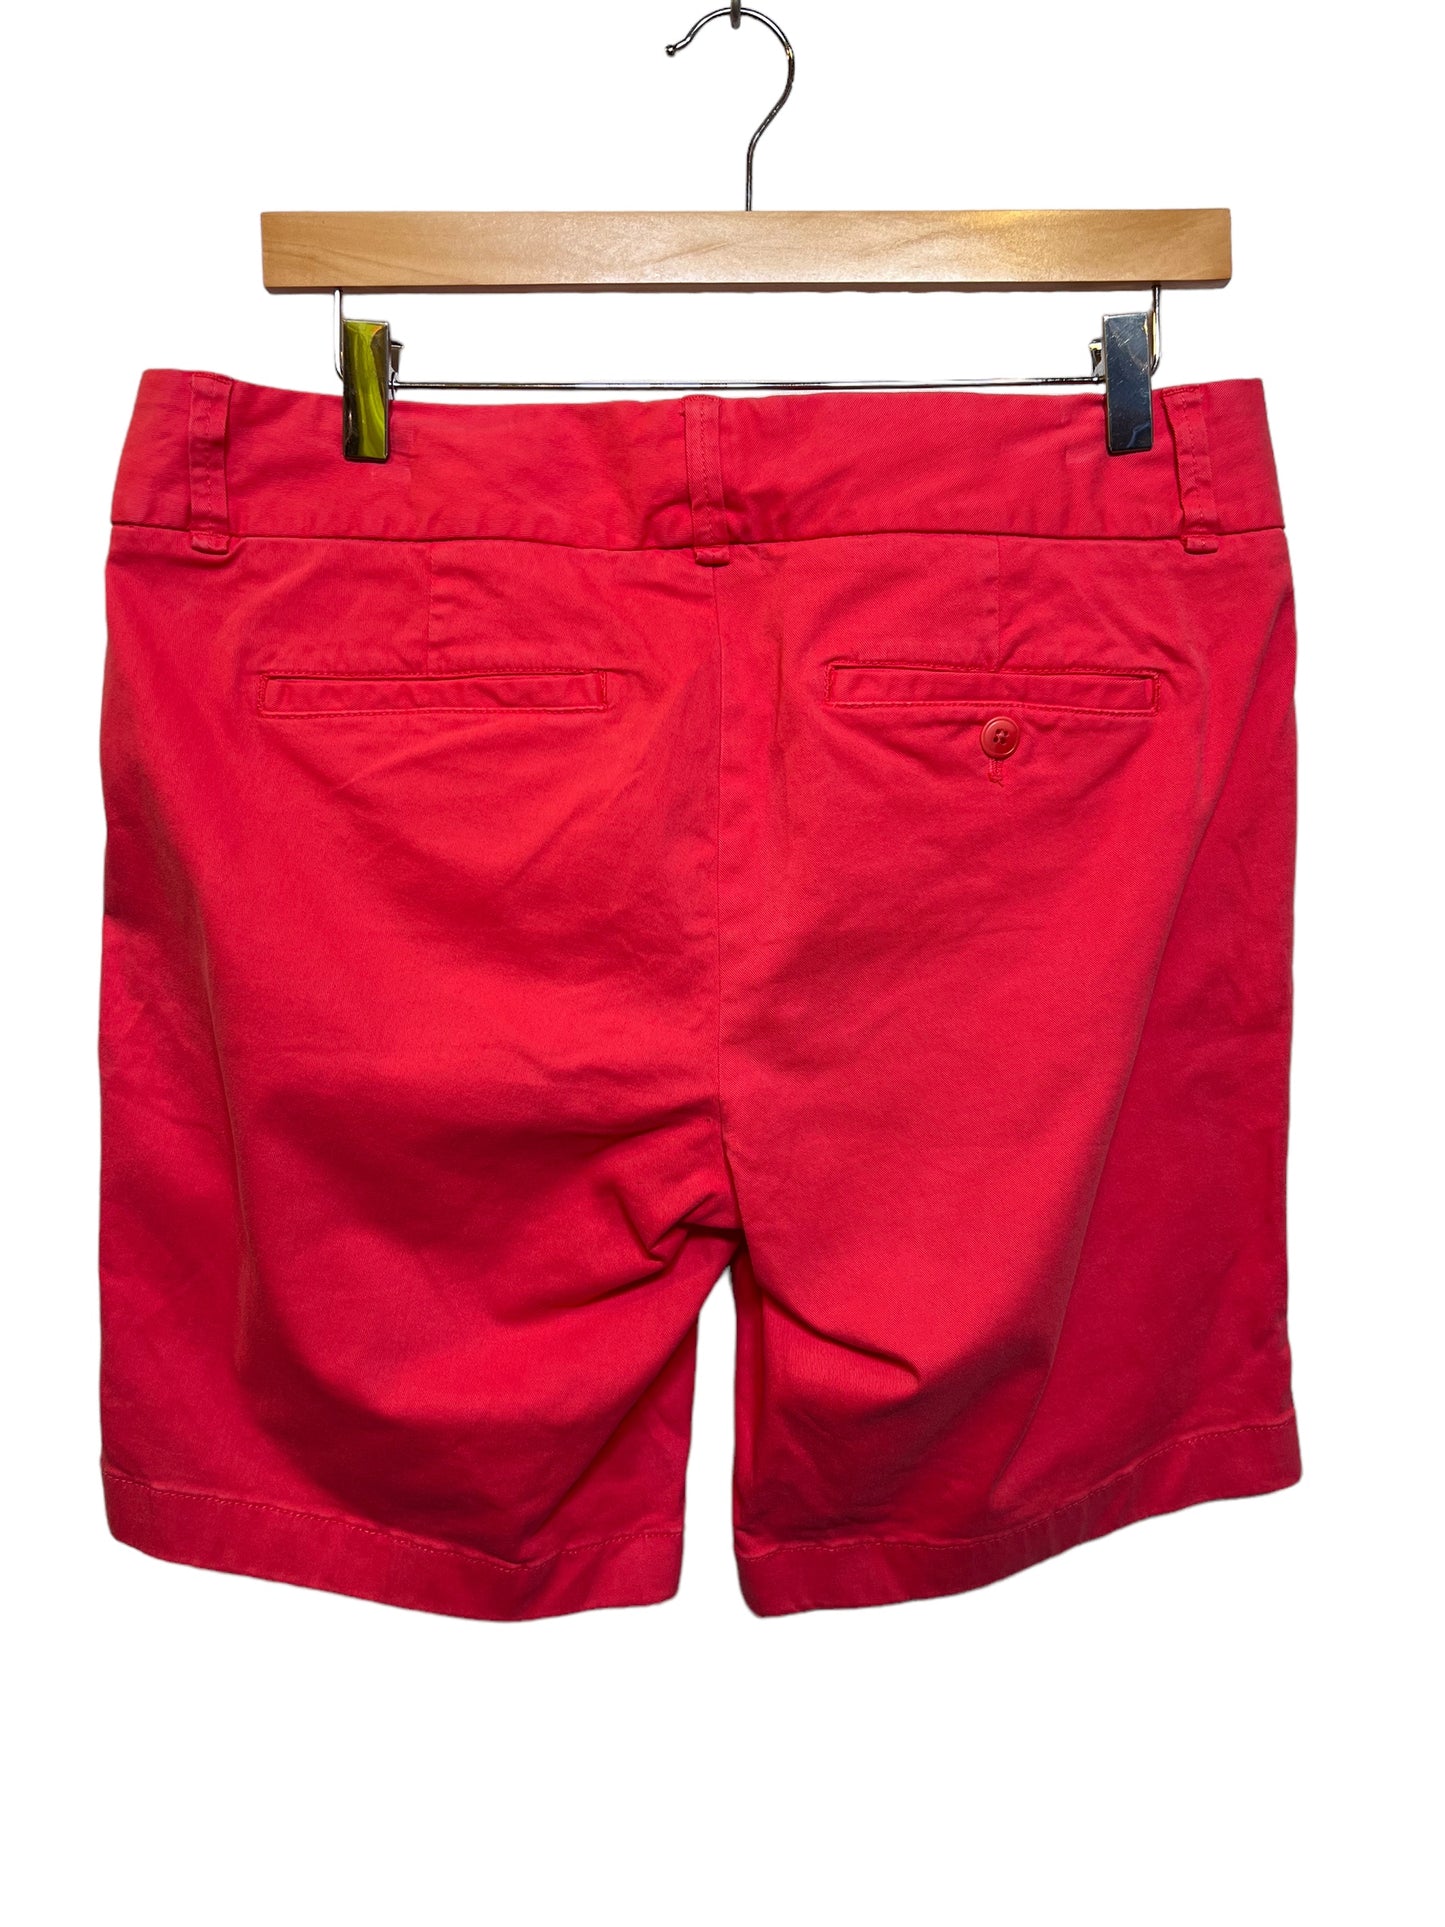 Red Chino Shorts (Size XL)